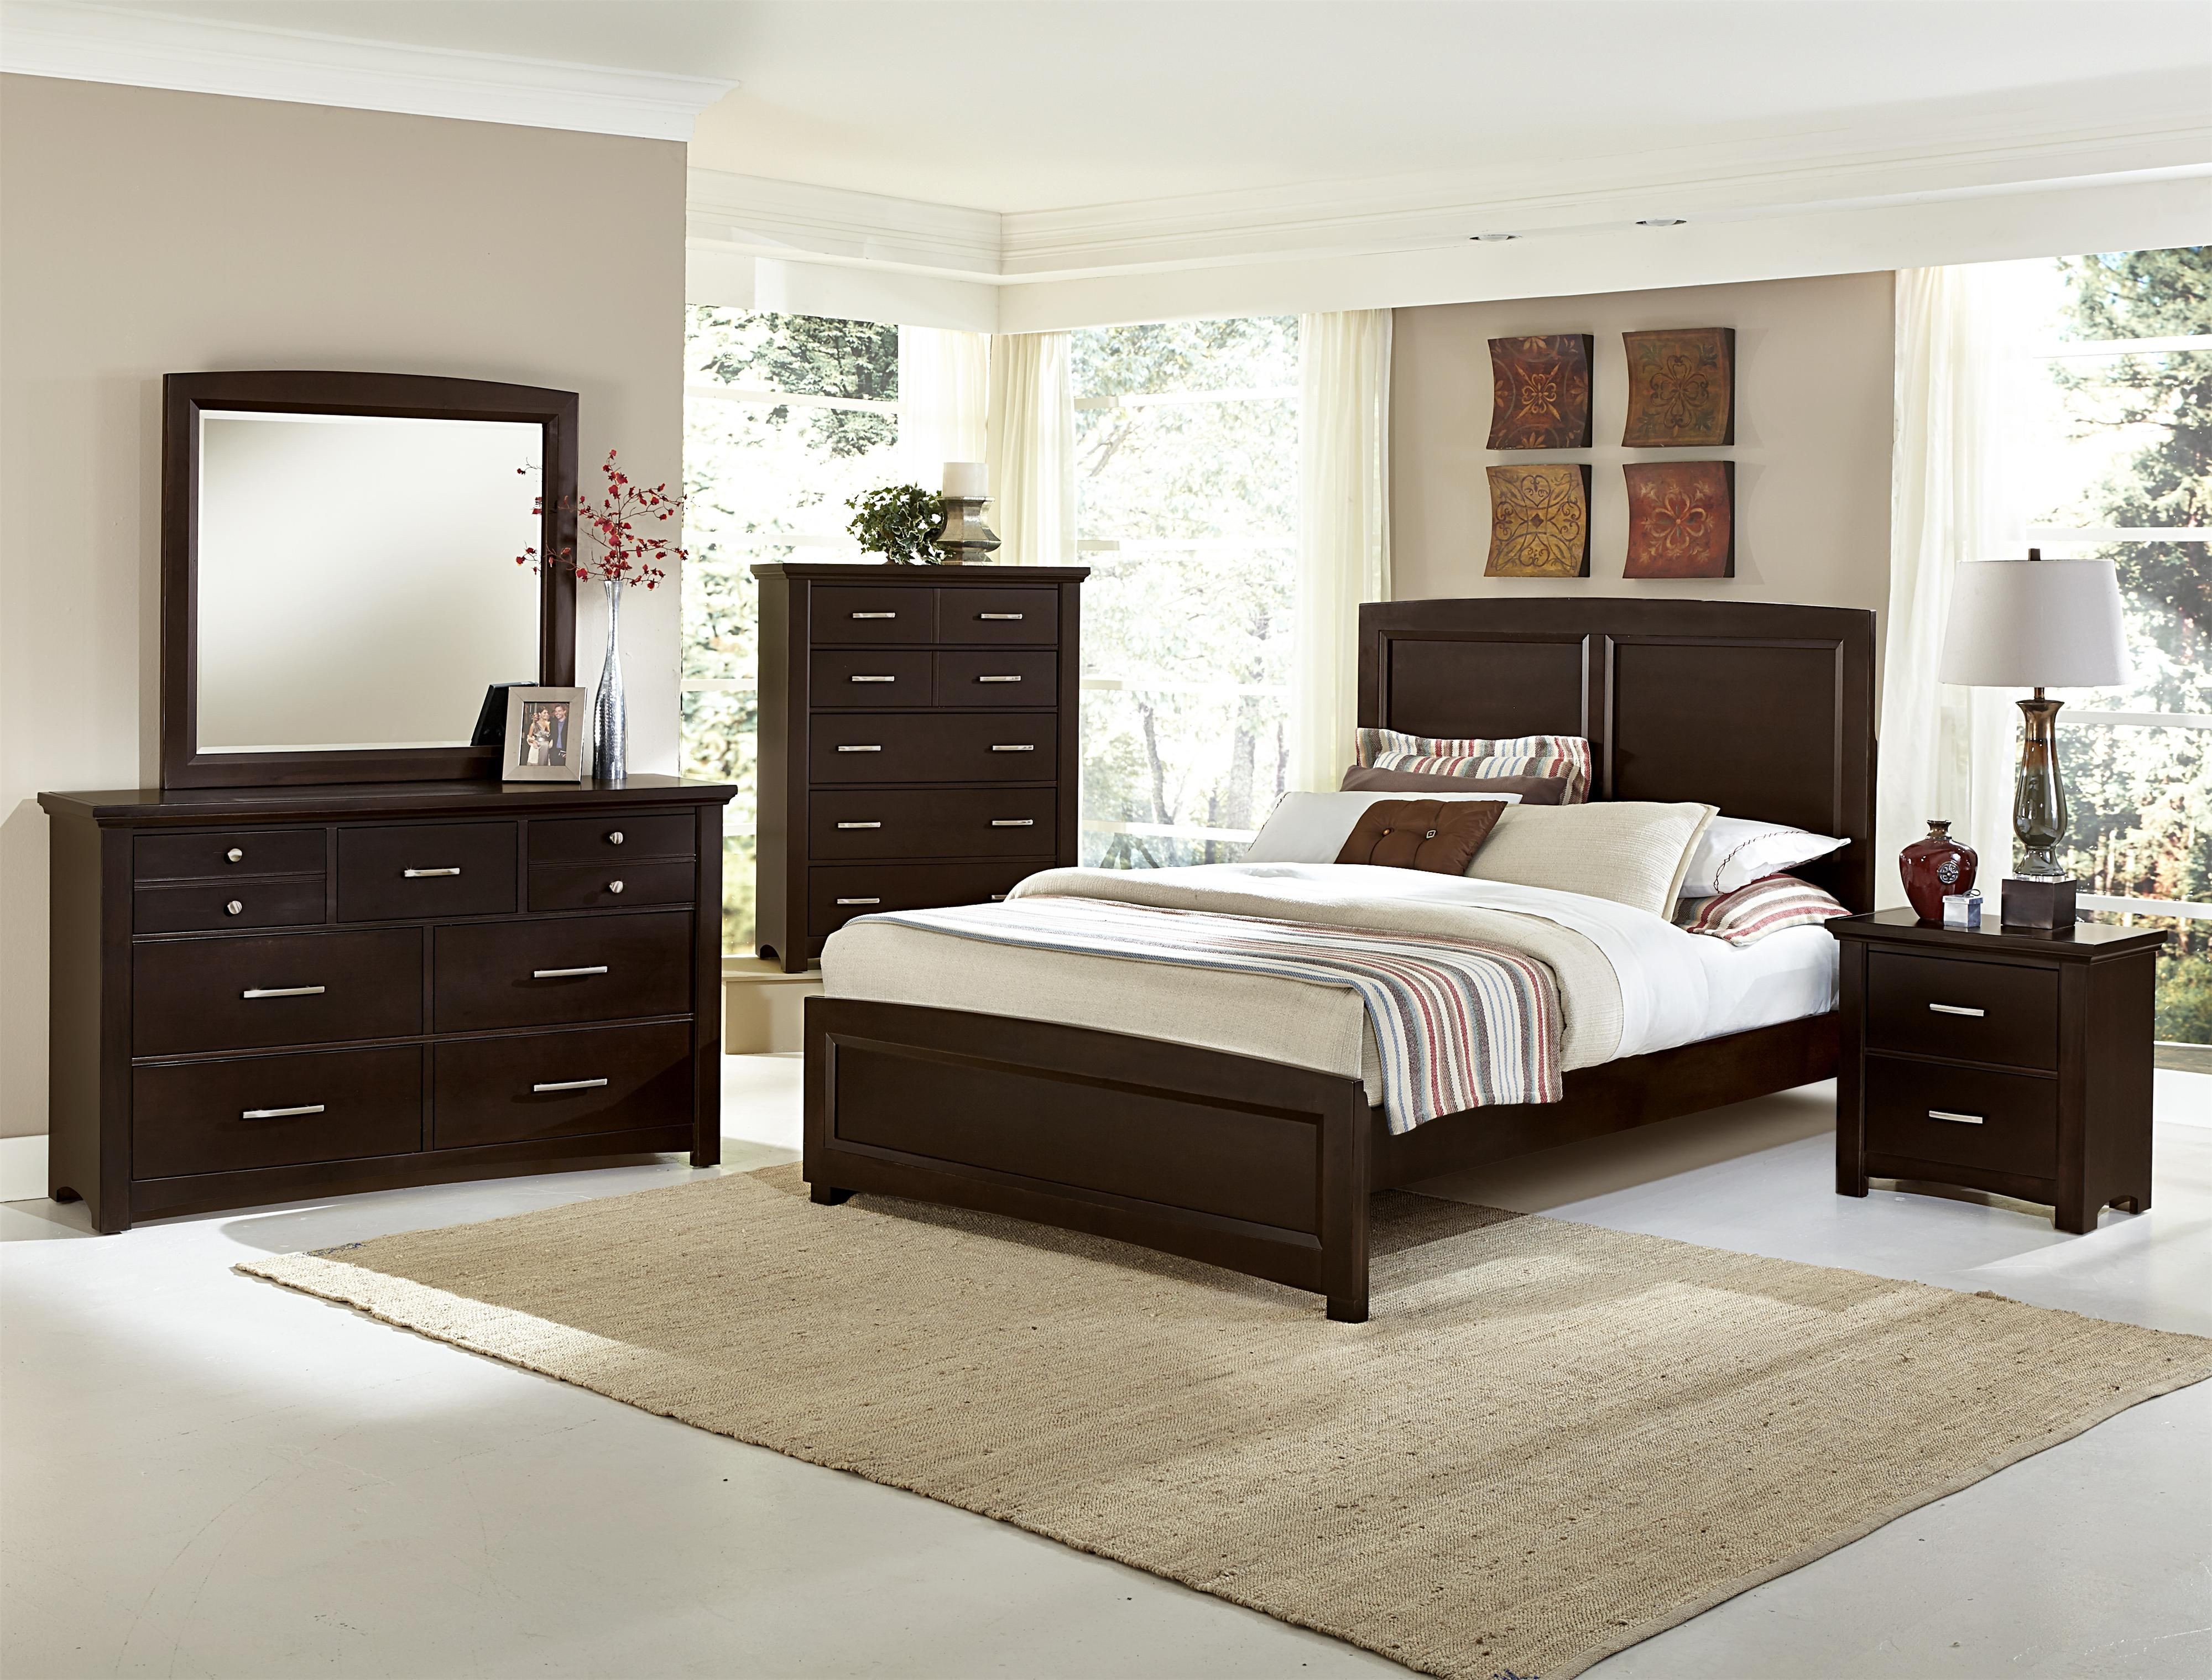 bassett mirrored bedroom furniture